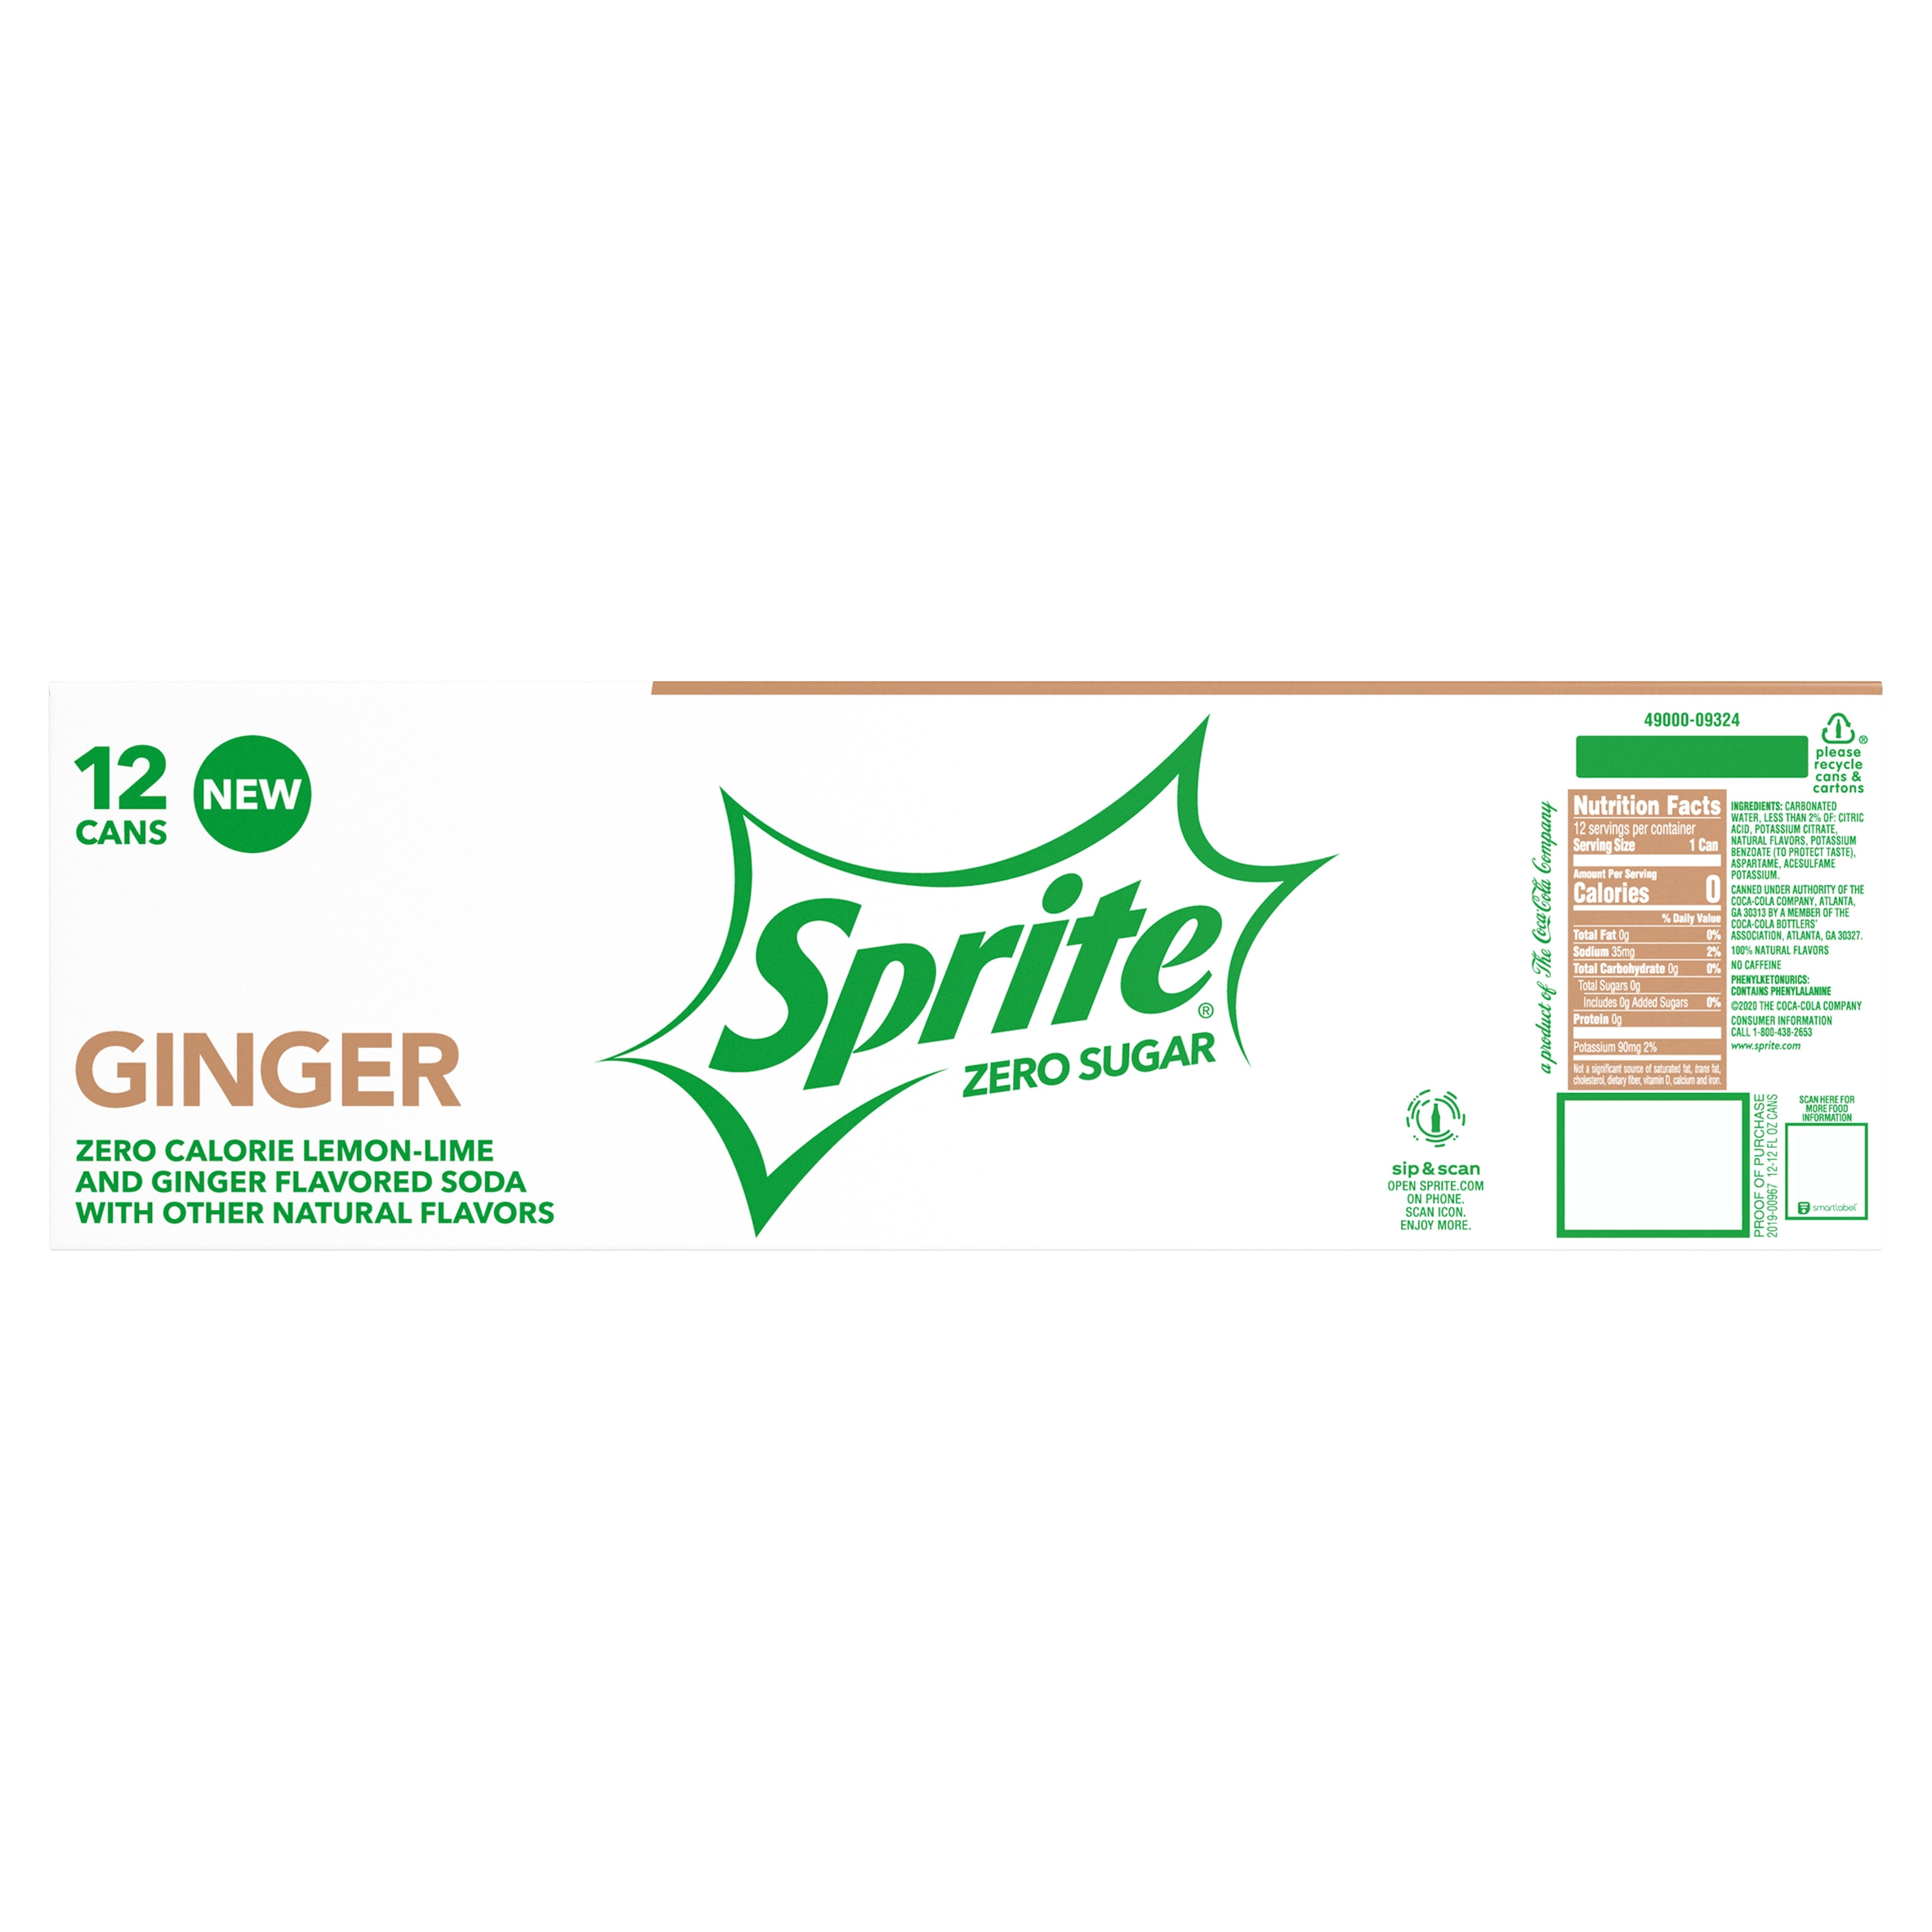 Sprite Ginger Zero Sugar Fridge Pack Cans, 12 fl oz, 12 Pack - image 2 of 8